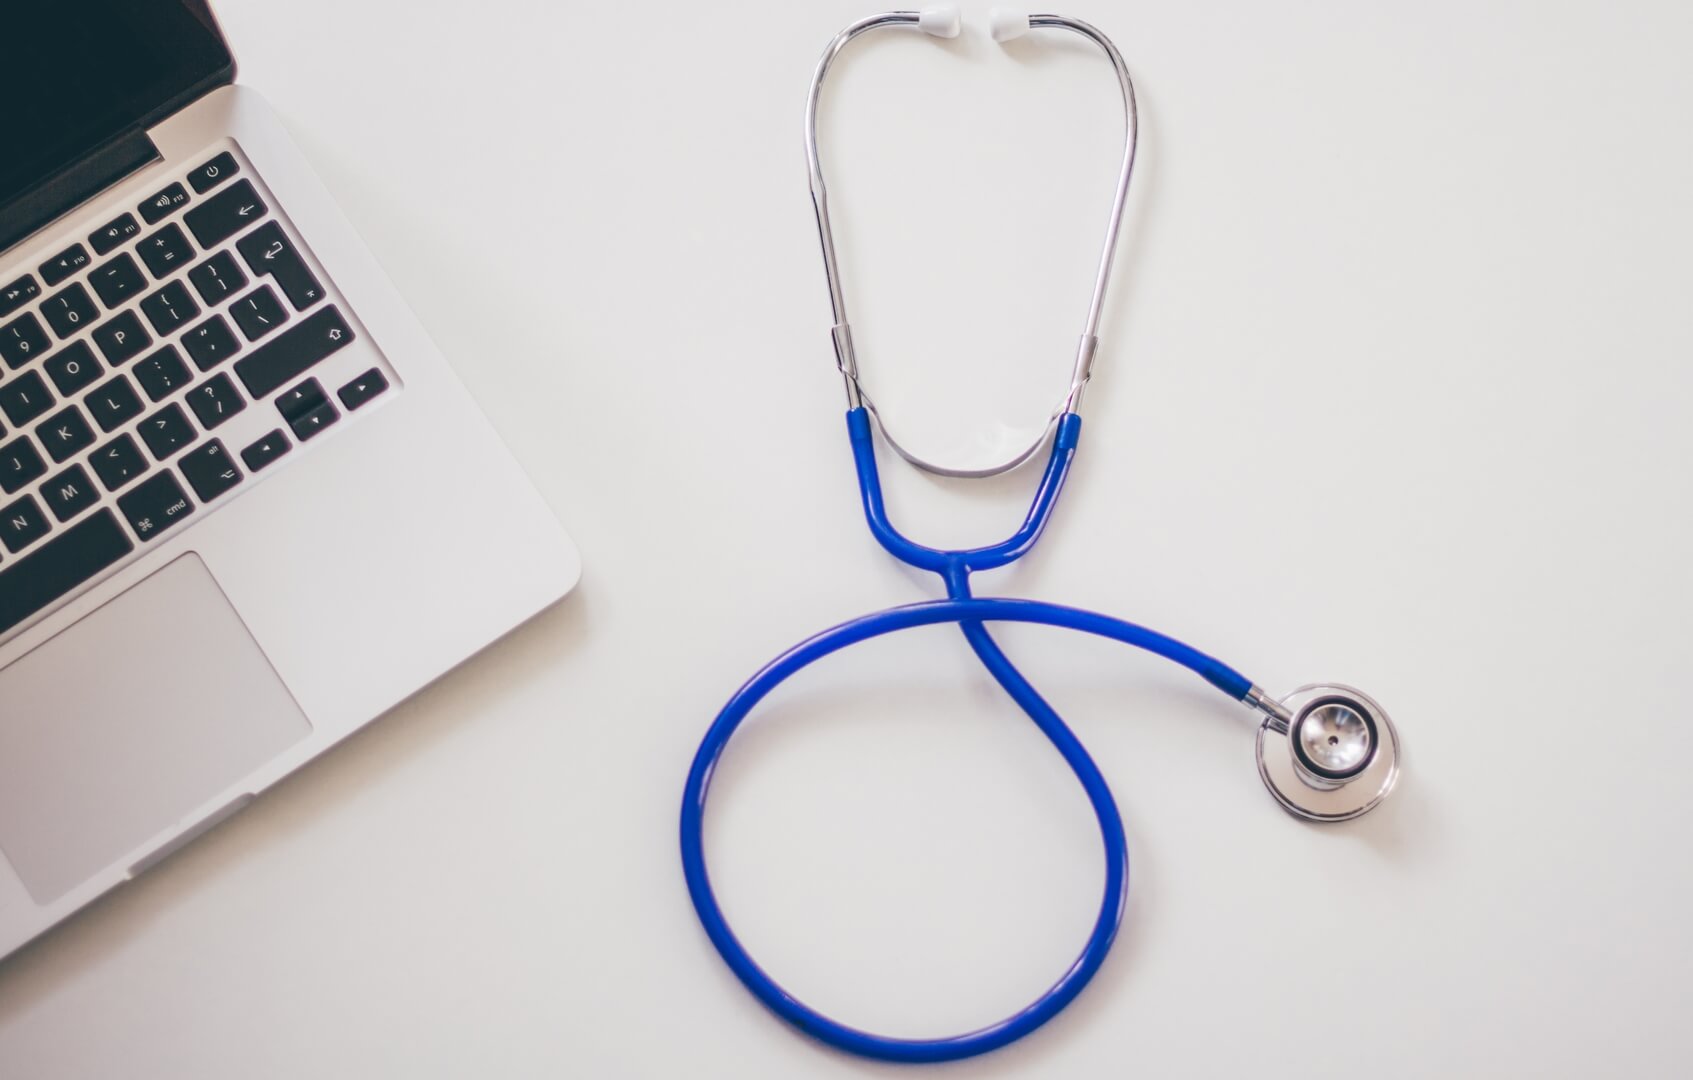 laptop dokter e-health zorg gezondheid gezondheidszorg wifi internet computer